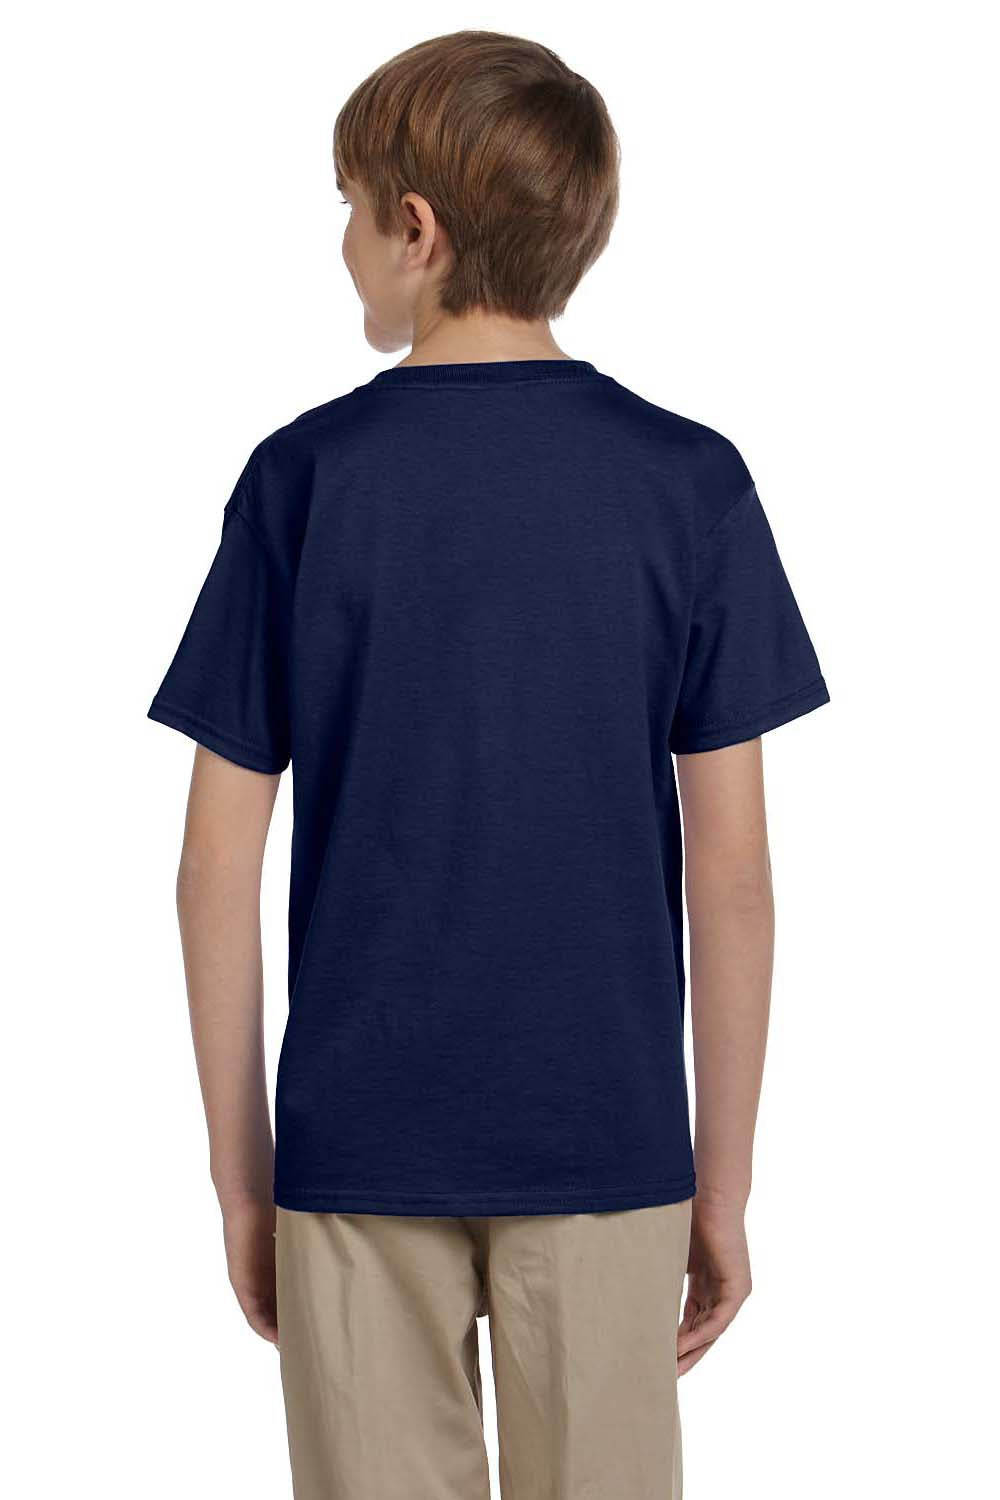 Hanes 5370 Youth EcoSmart Short Sleeve Crewneck T-Shirt Navy Blue Back